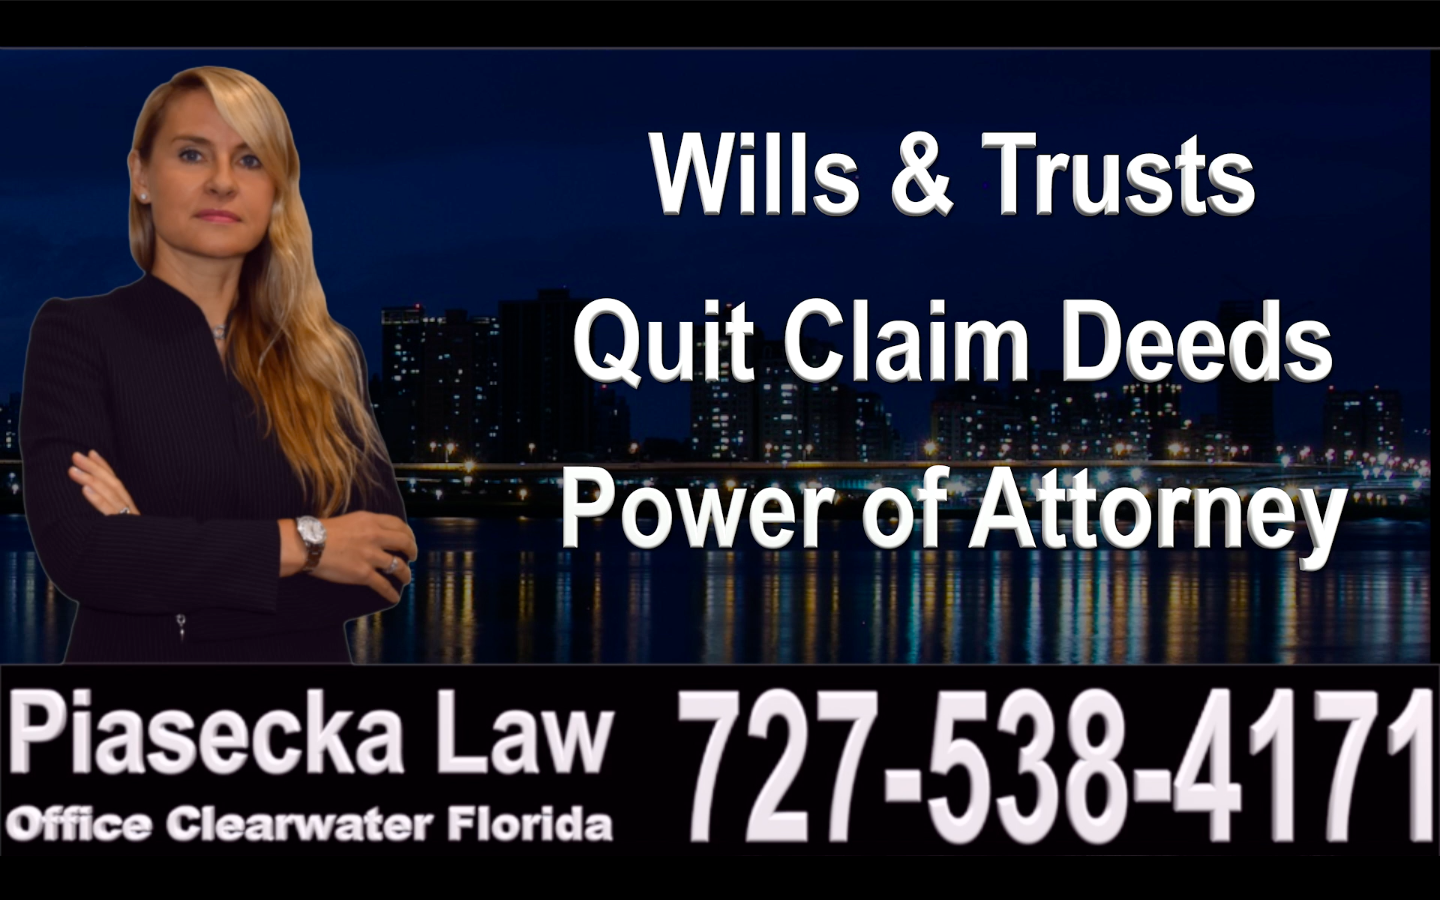 Wills, Trusts, Lawyer, Attorney, Pinellas Park